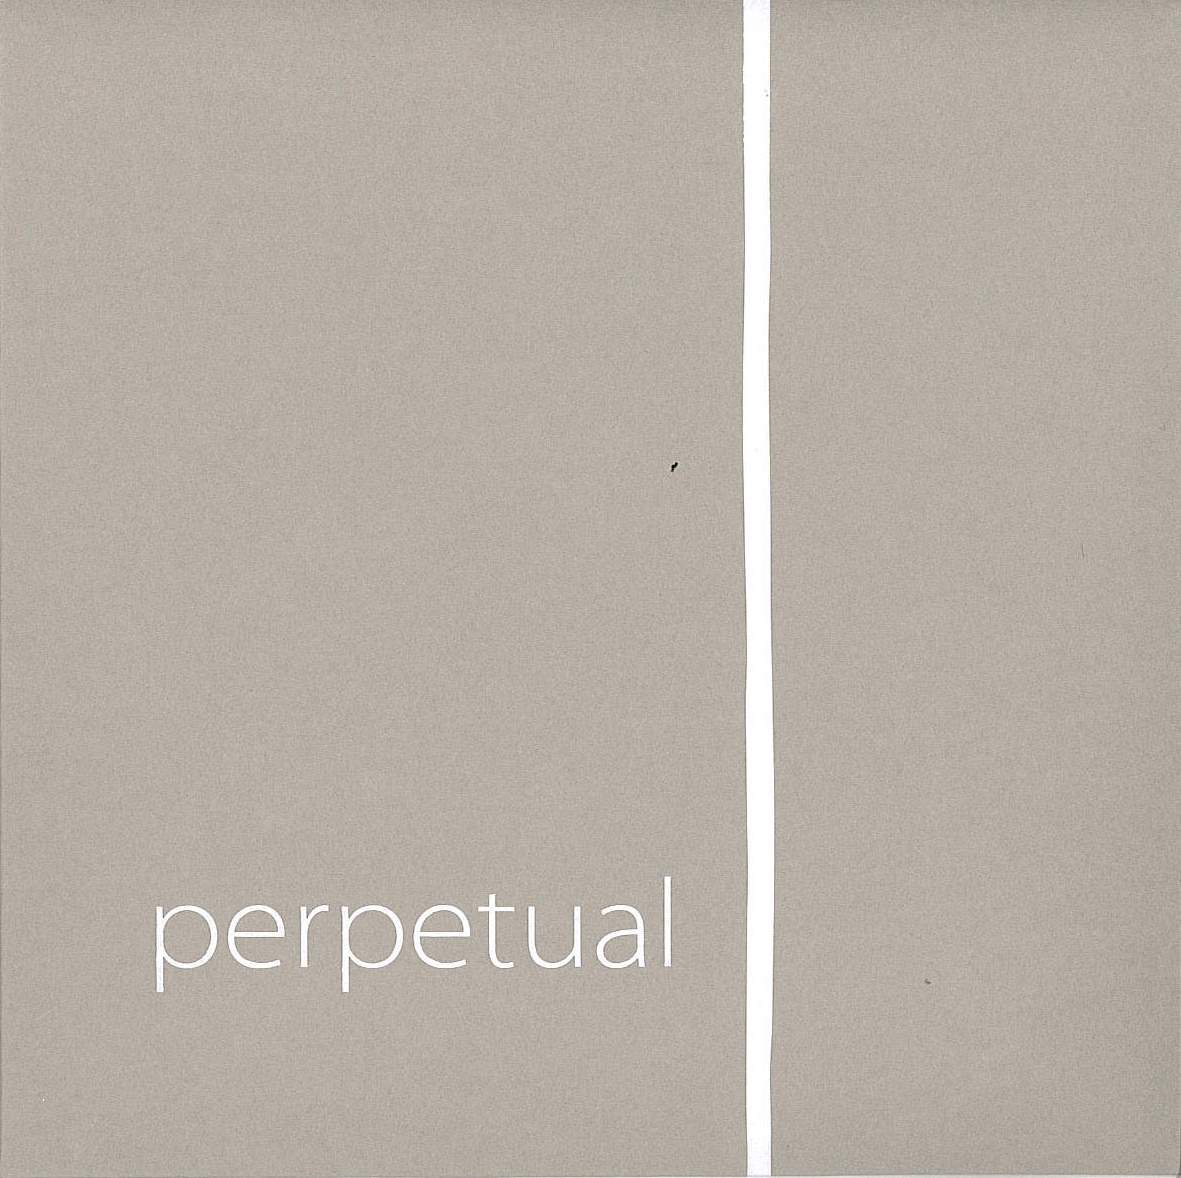 Perpetual】-Pirastro- - I Love Strings. | 国内最大級クラシック弦の通販